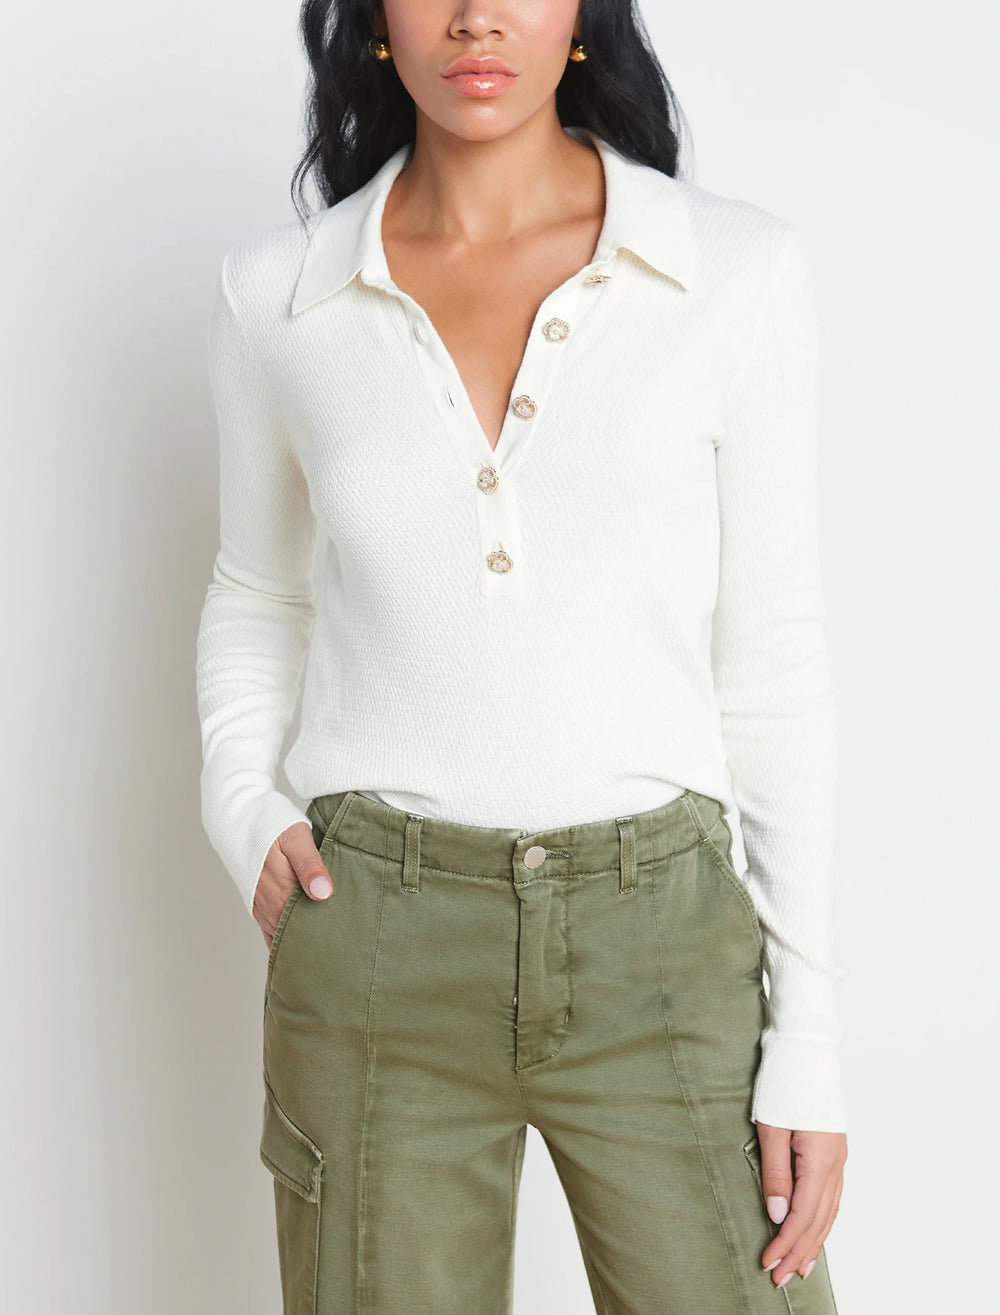 Model wearing L'agence sterling jewel button sweater in ivory.